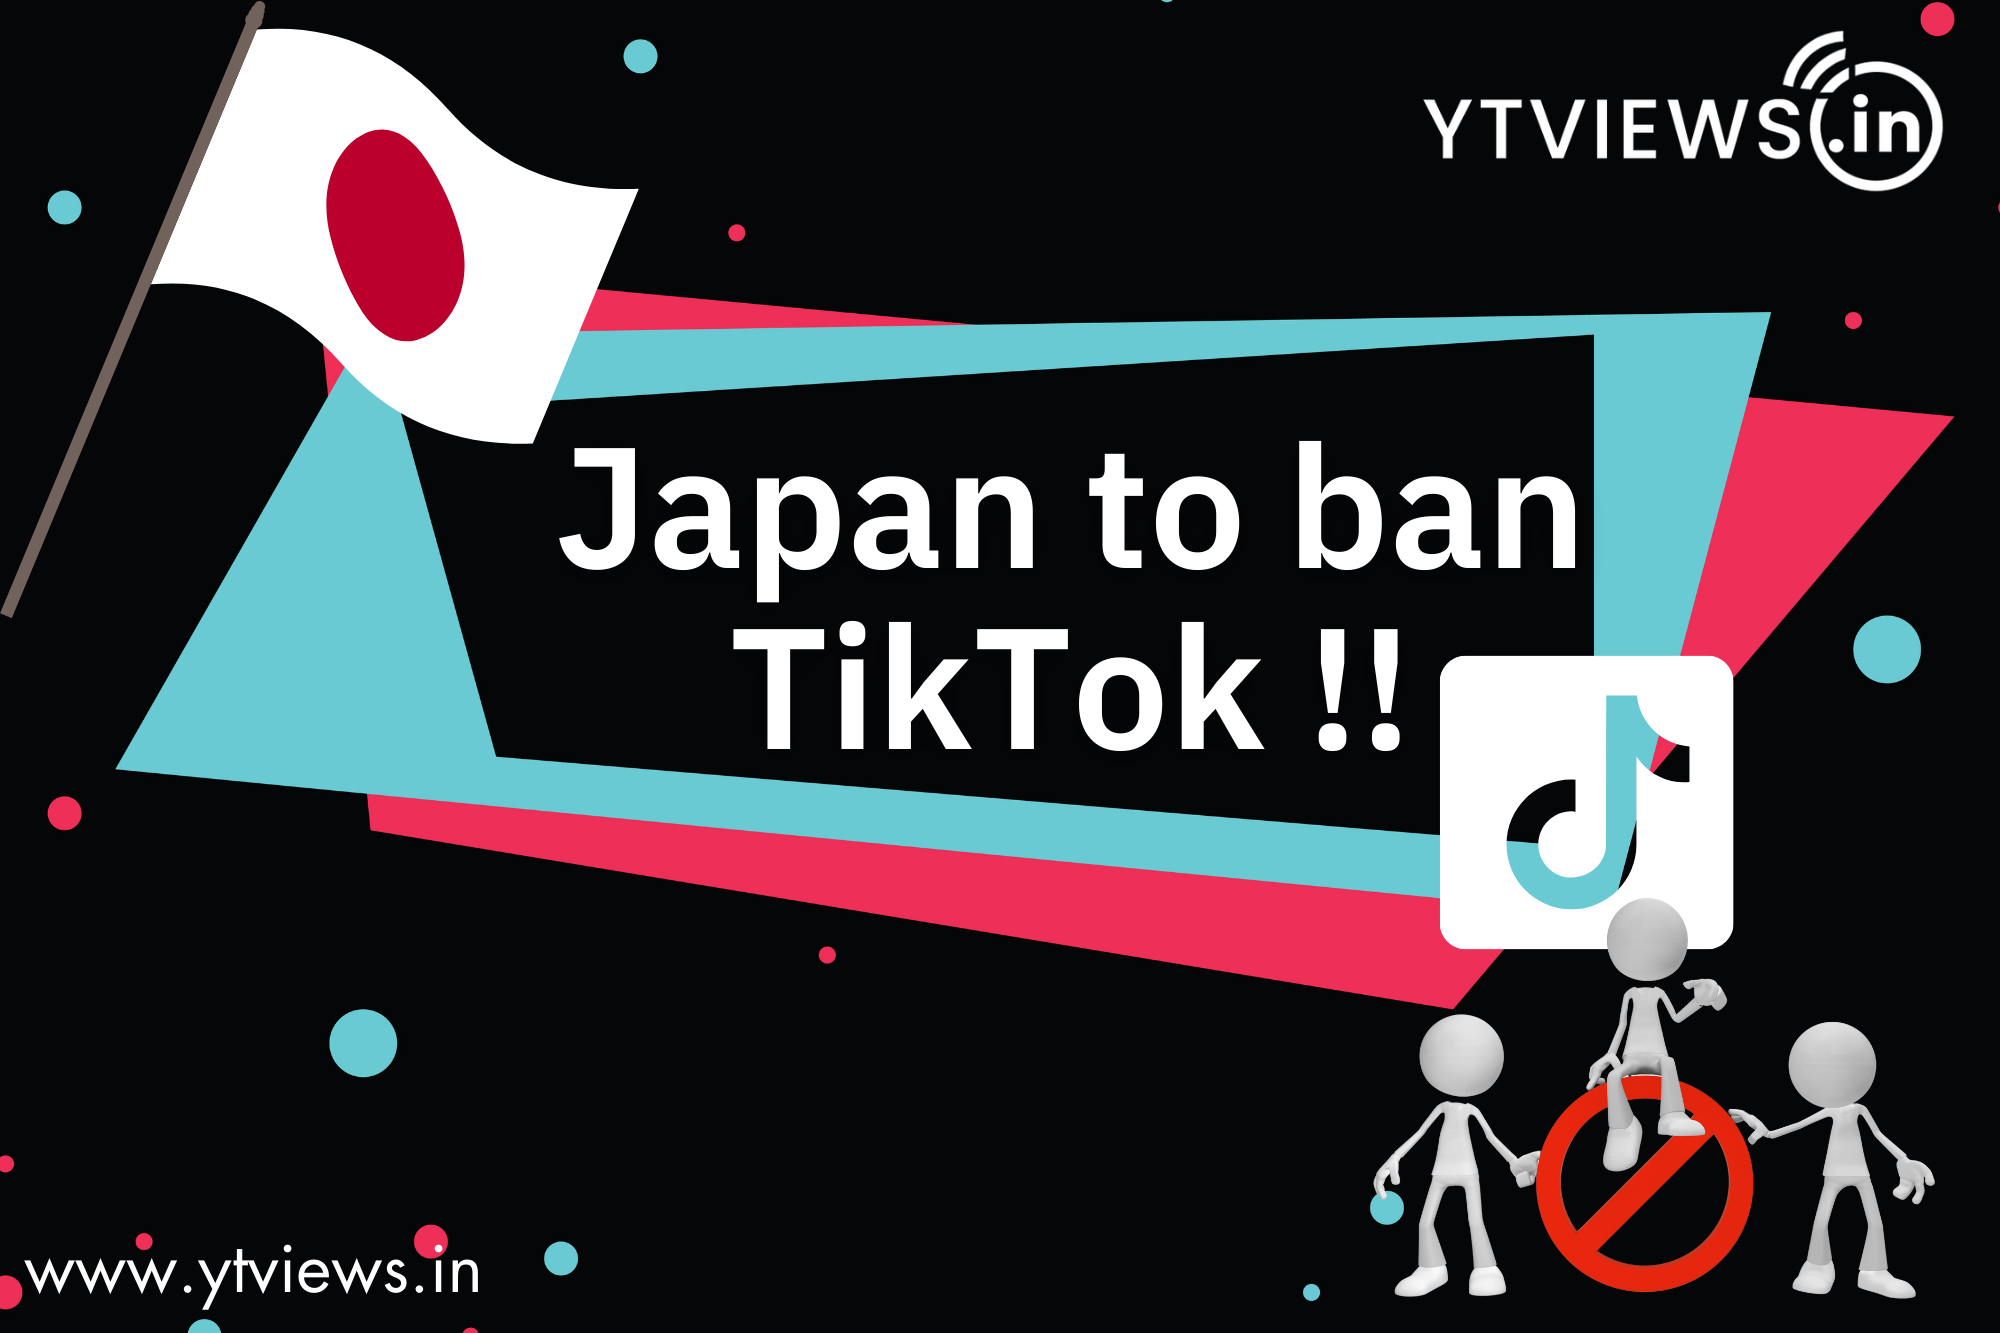 Why has Japan set its sights on prohibiting using TikTok and similar platforms?